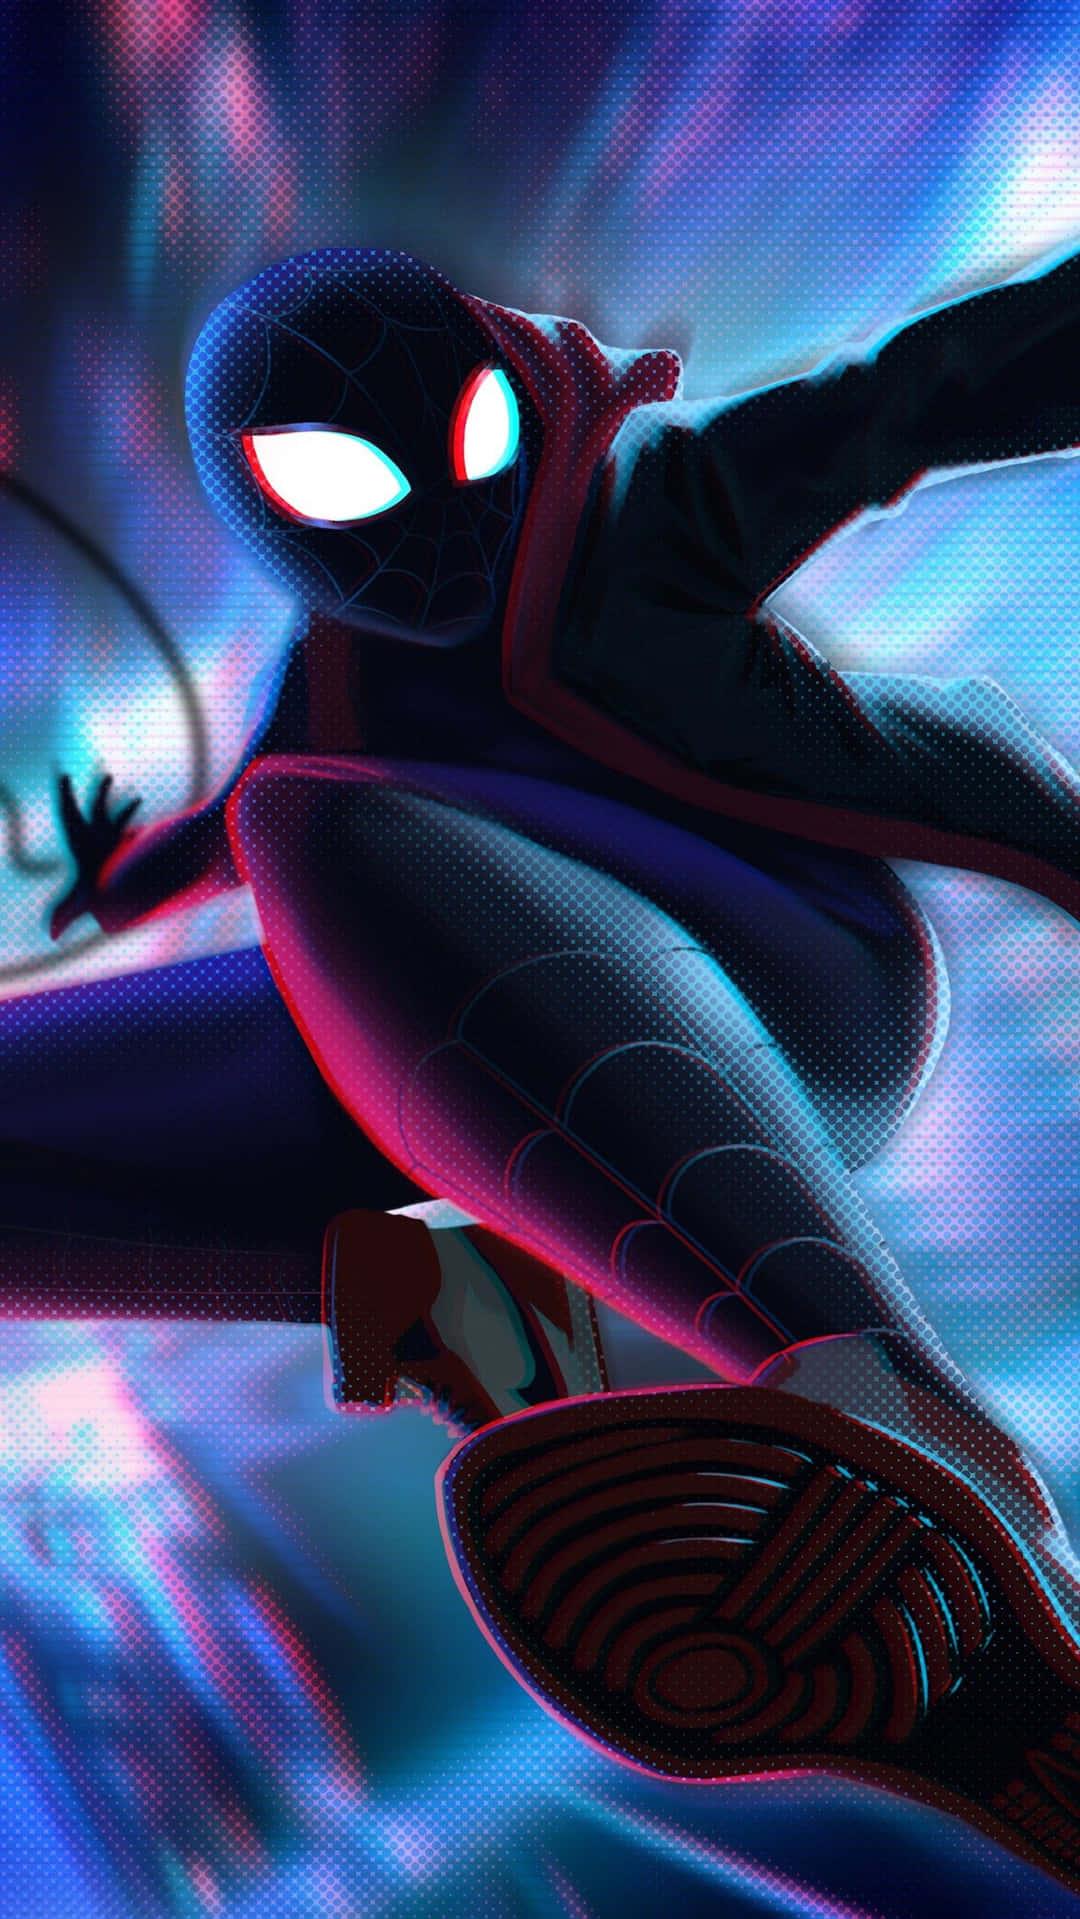 Blurred Black Suit Spider Man Miles Morales iPhone